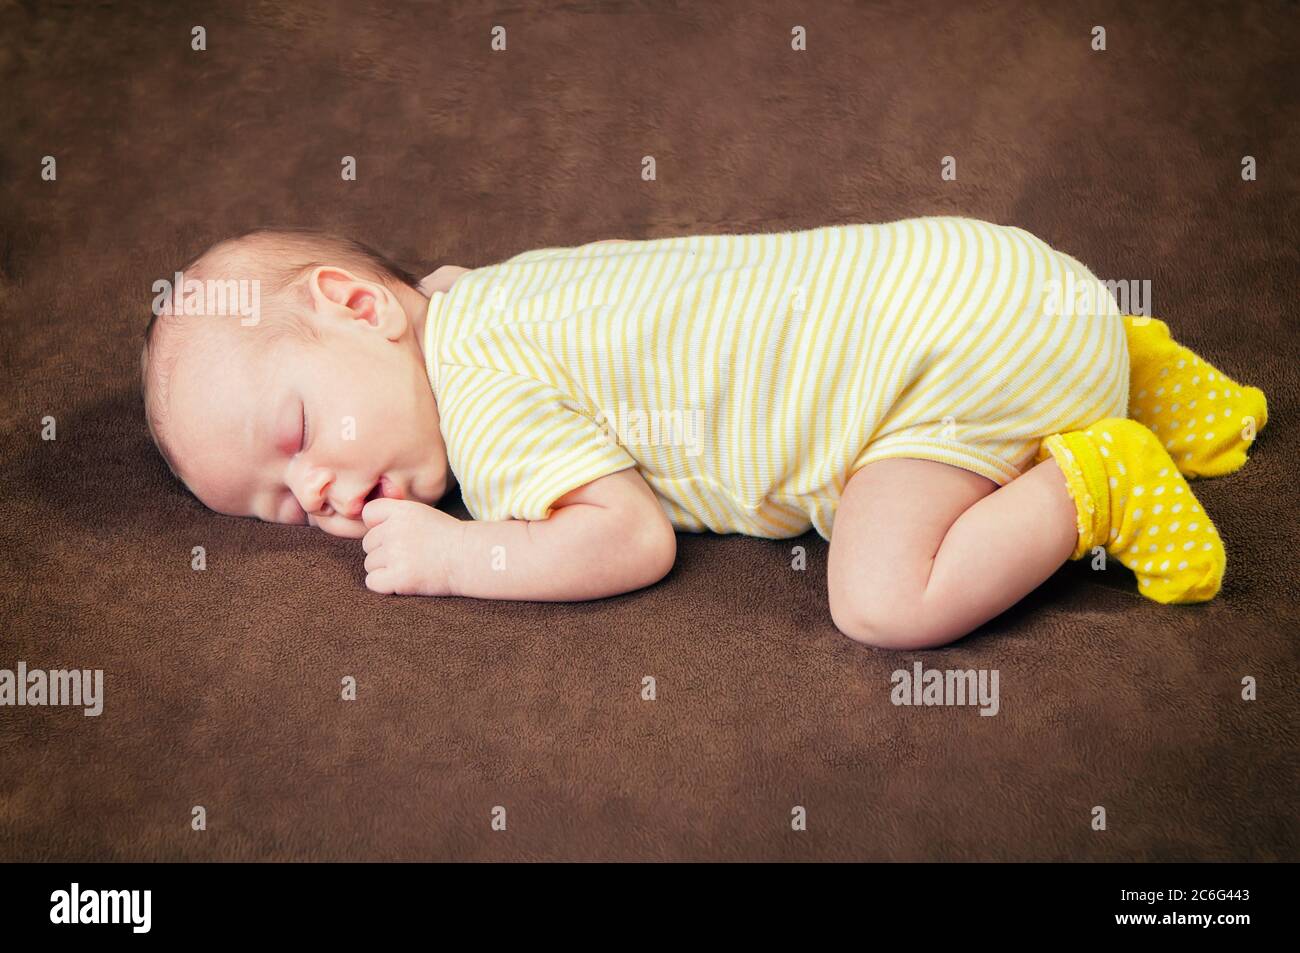 Beautiful newborn baby boy sleeping peacefully on the soft brown blanket Stock Photo